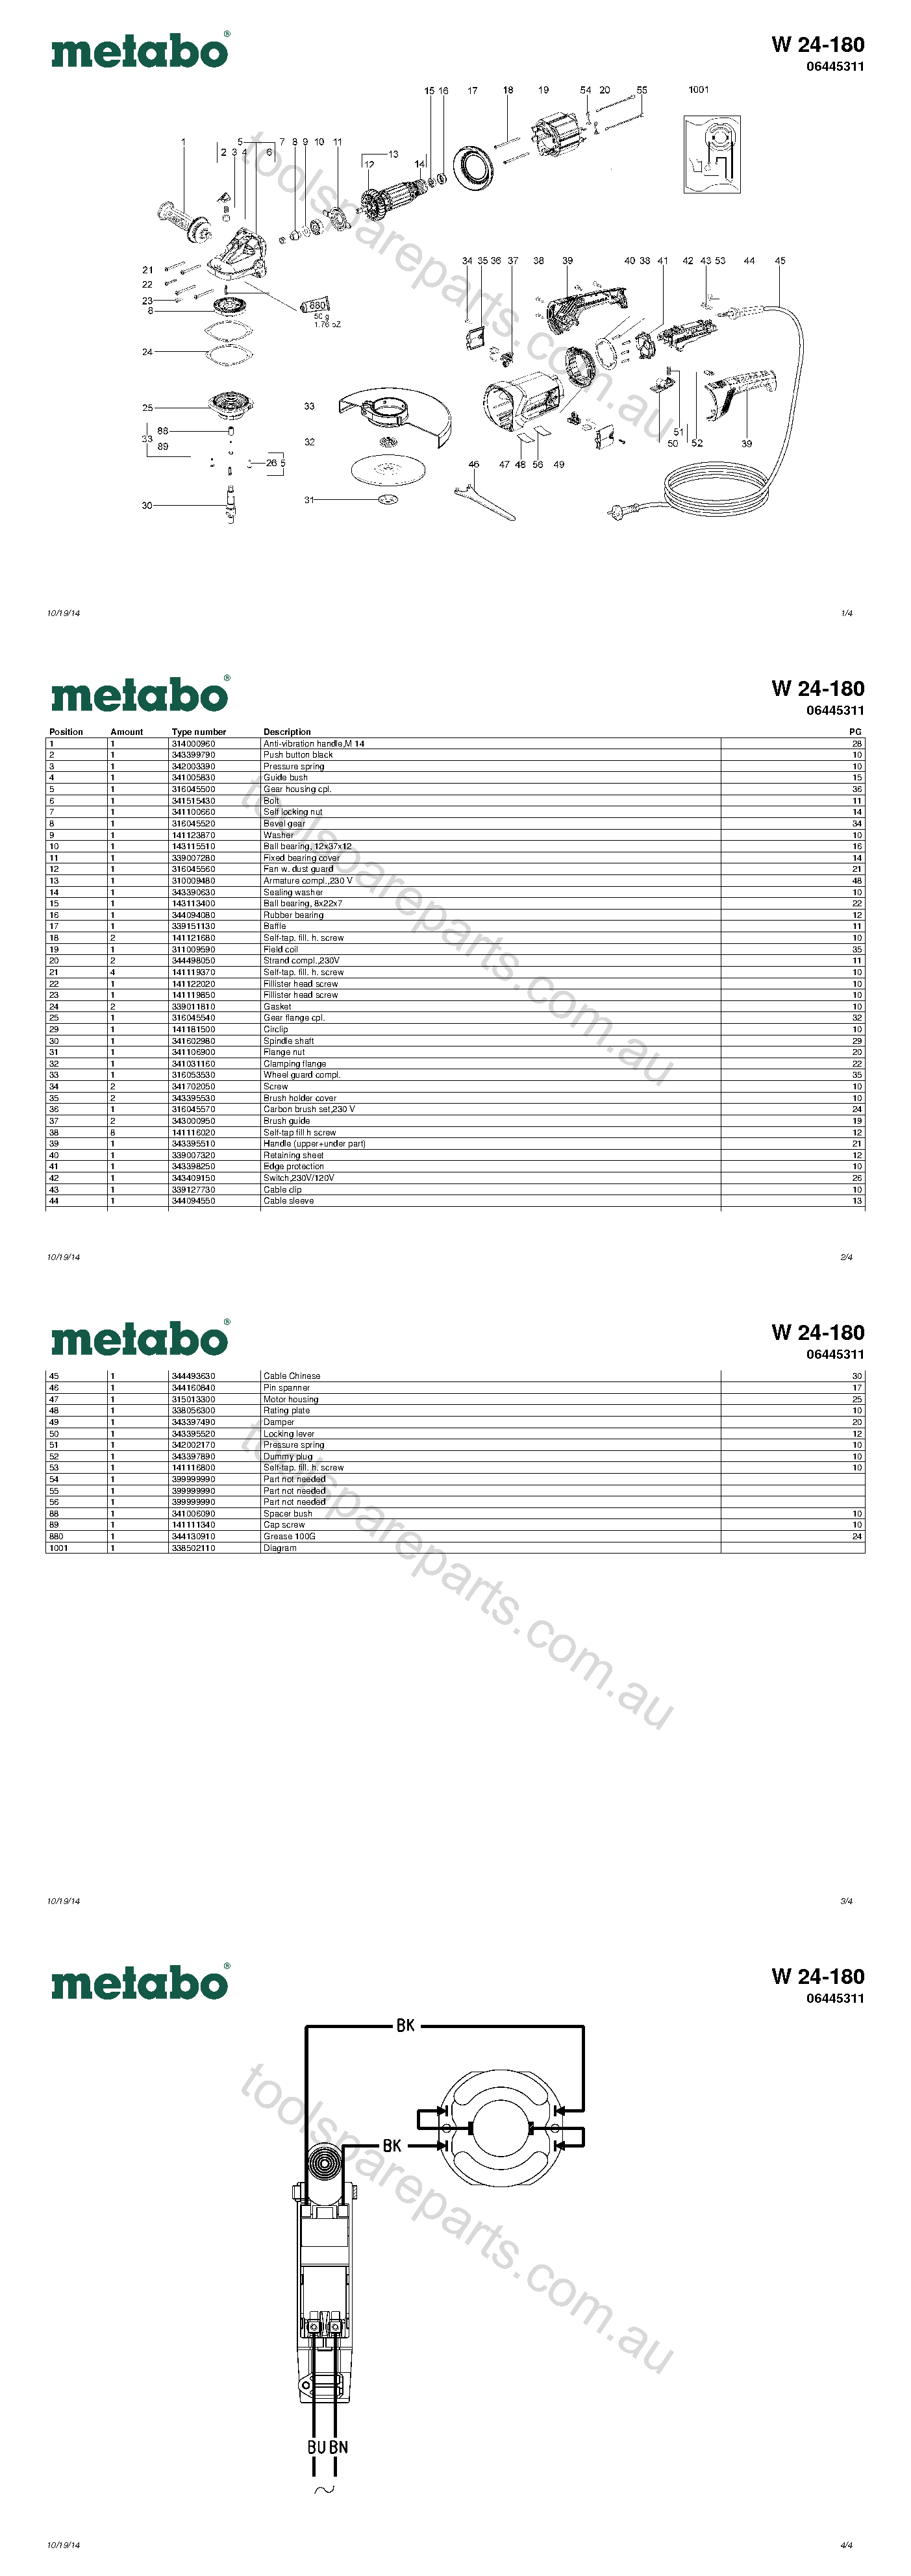 Metabo W 24-180 06445311  Diagram 1